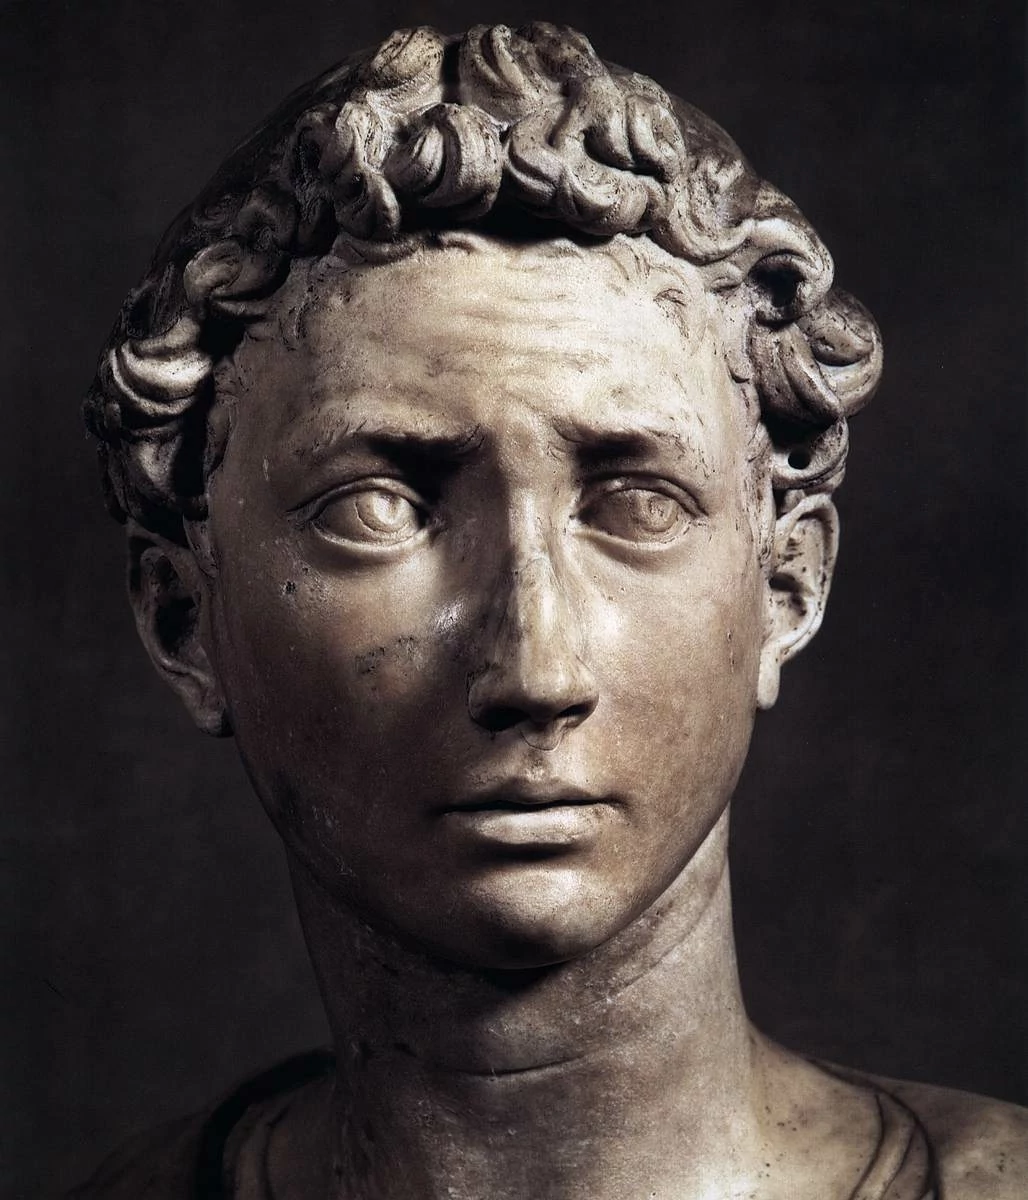 Donatello - A celibate perfectionist revives classical sculpture